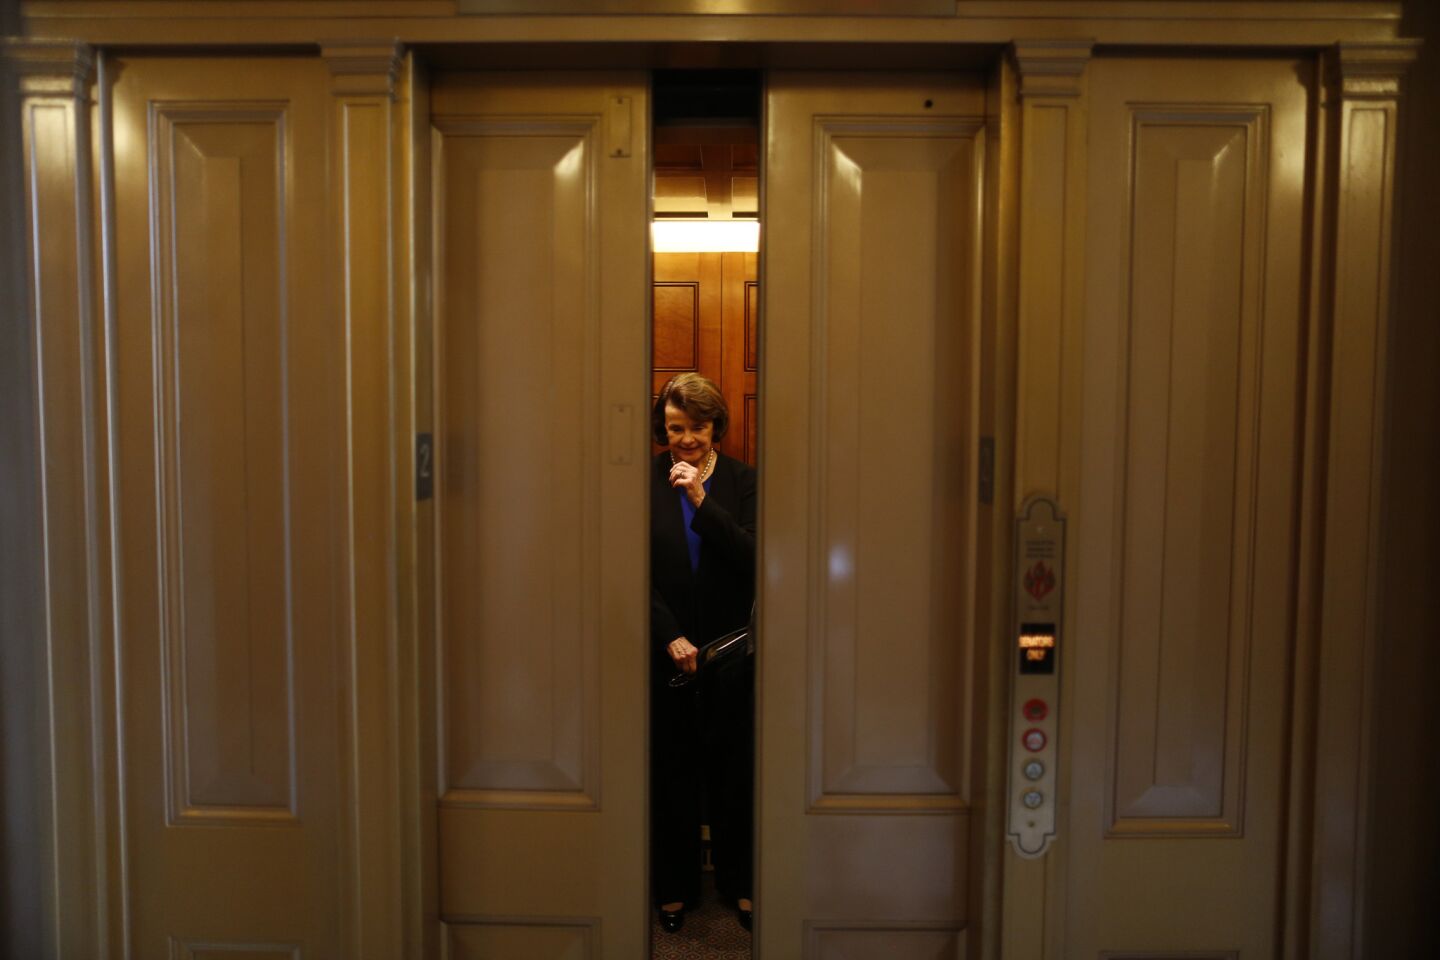 Sen. Dianne Feinstein (D-Calif.) is seen in an elevator on Capitol Hill after speaking on the Senate floor about gun legislation.